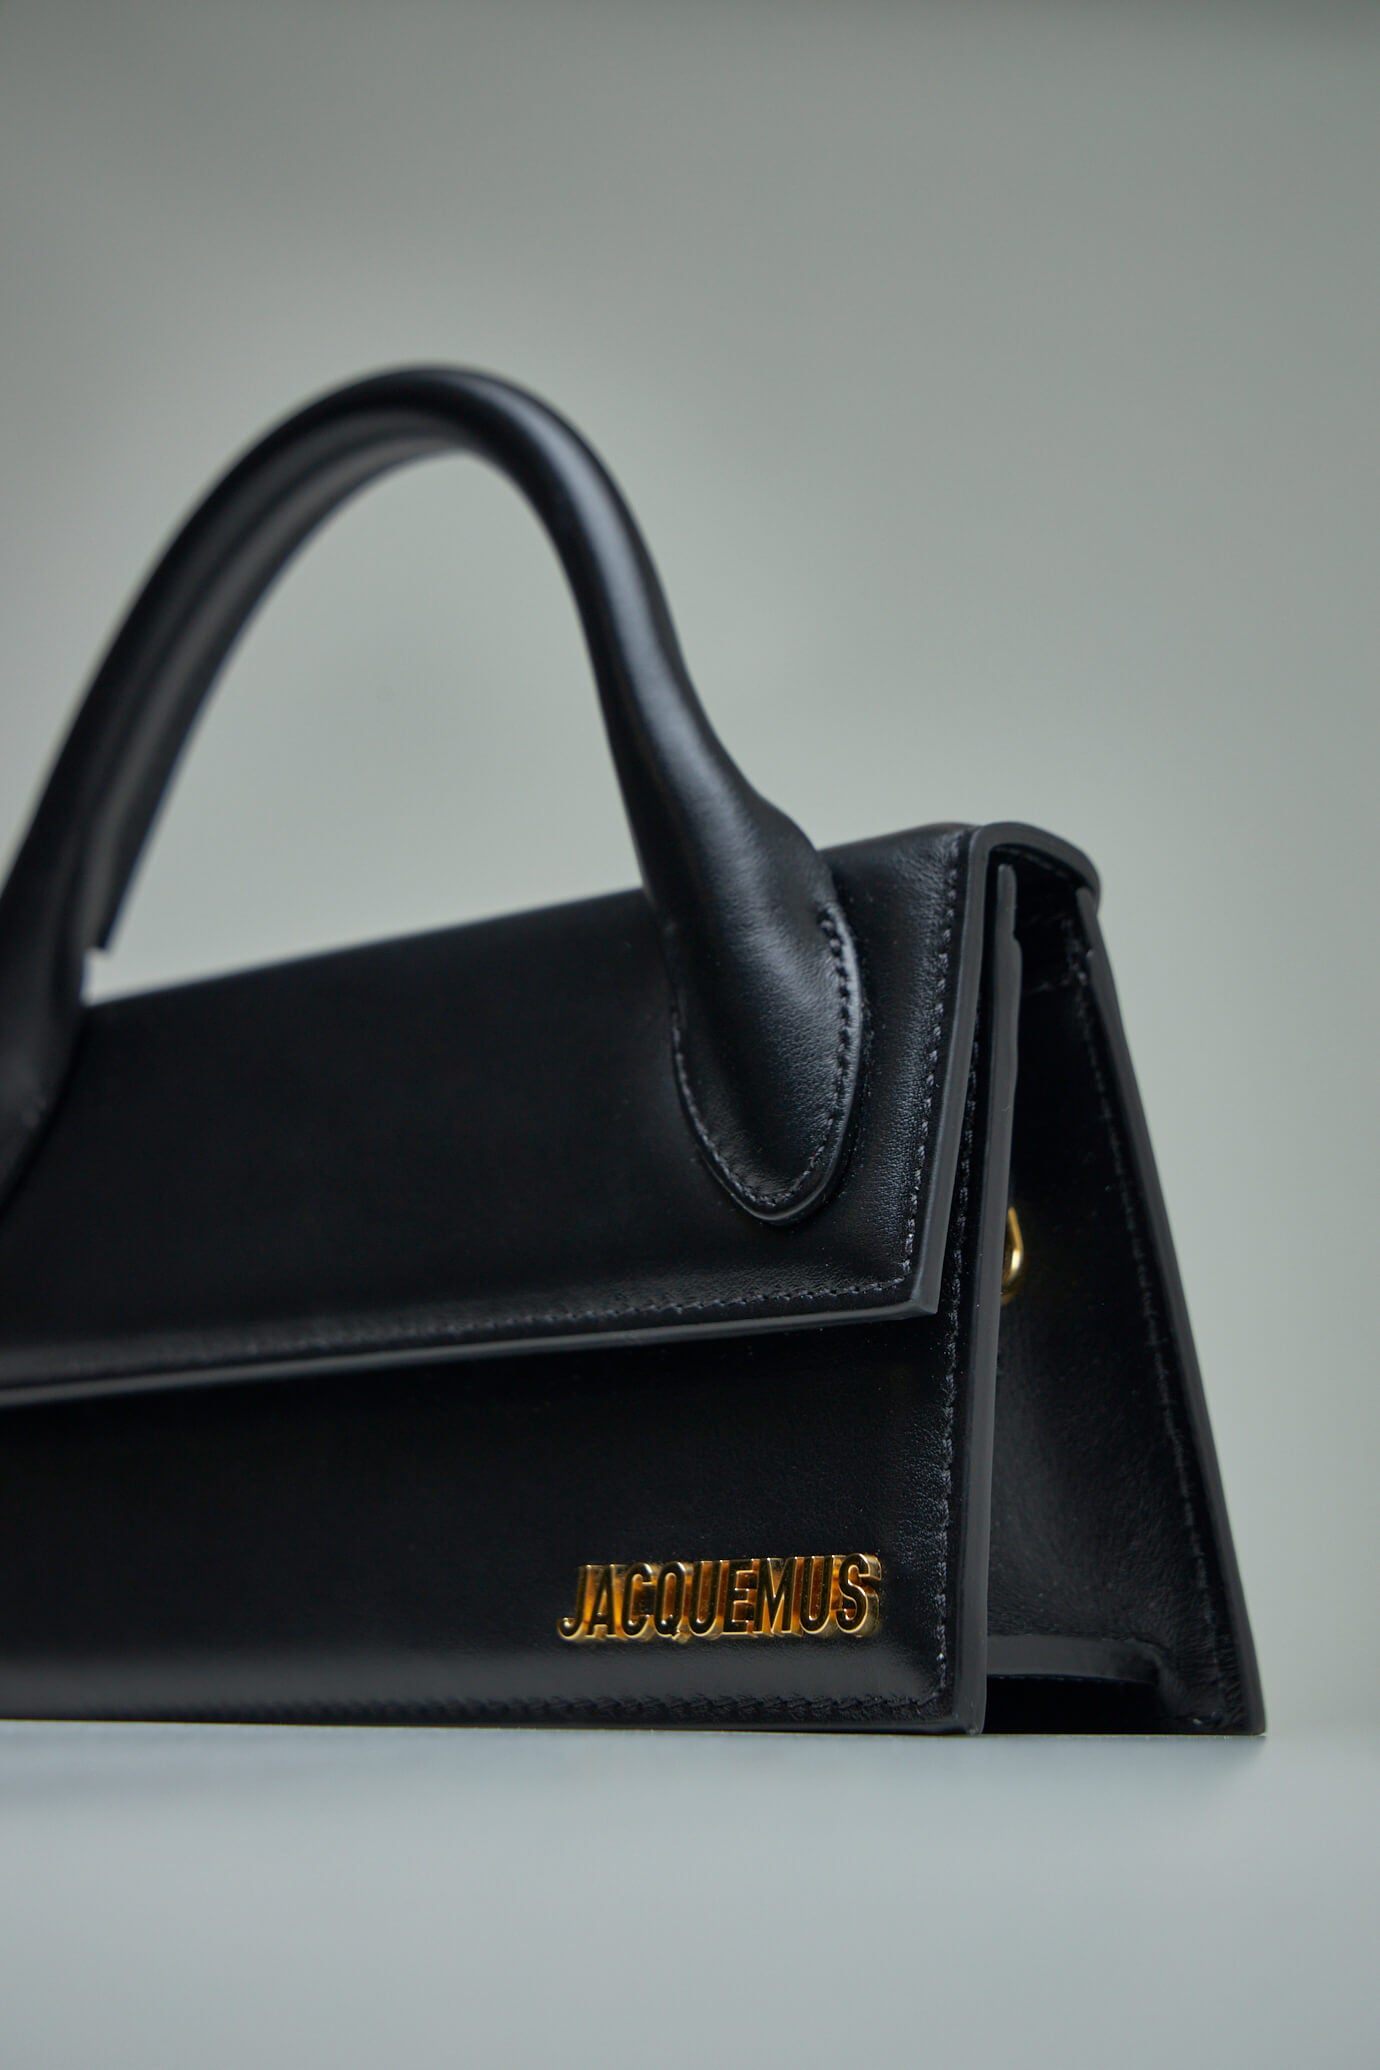 Le Chiquito Long Bag - Jacquemus - Black - Leather